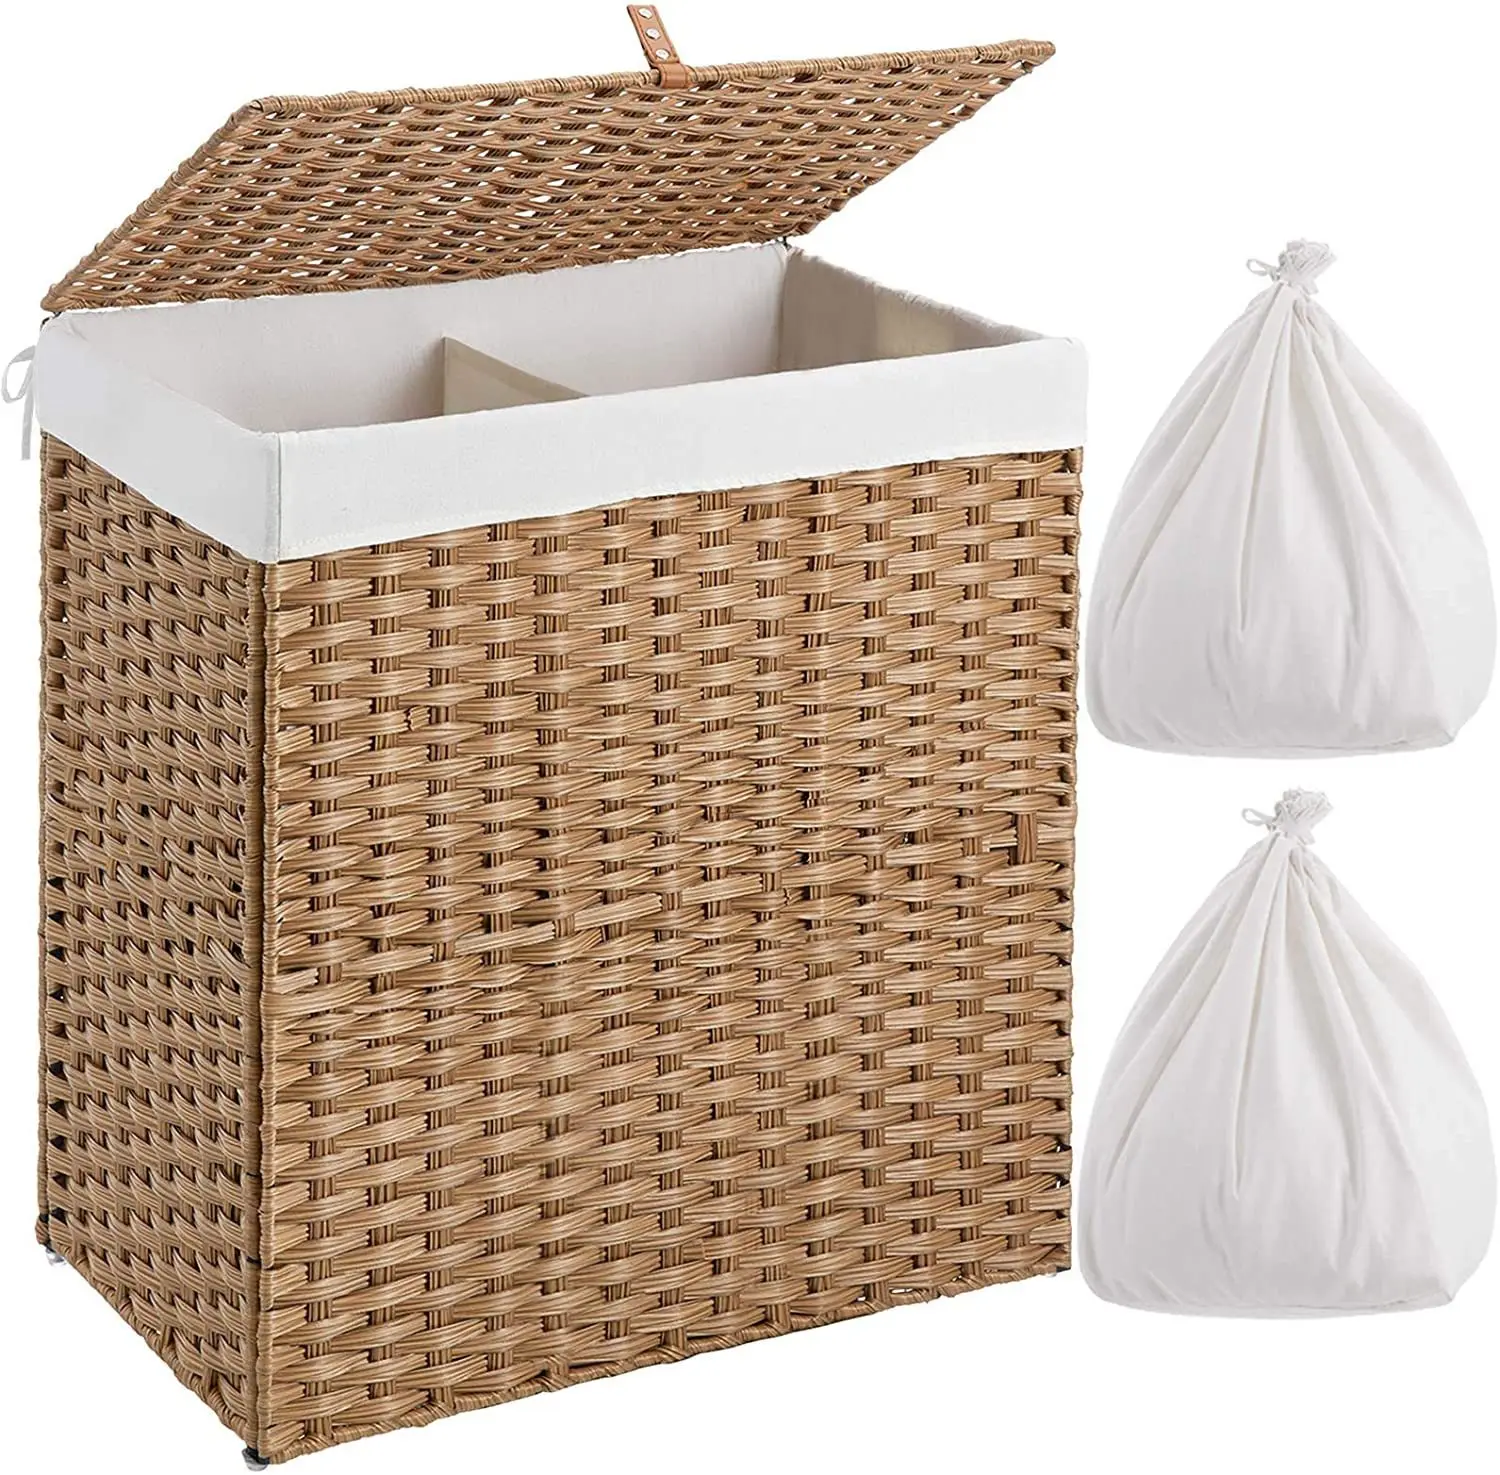 Hand Woven PE Rattan Laundry Hamper Foldable Eco-friendly Laundry Bag Laundry Basket for Home Storage Organization